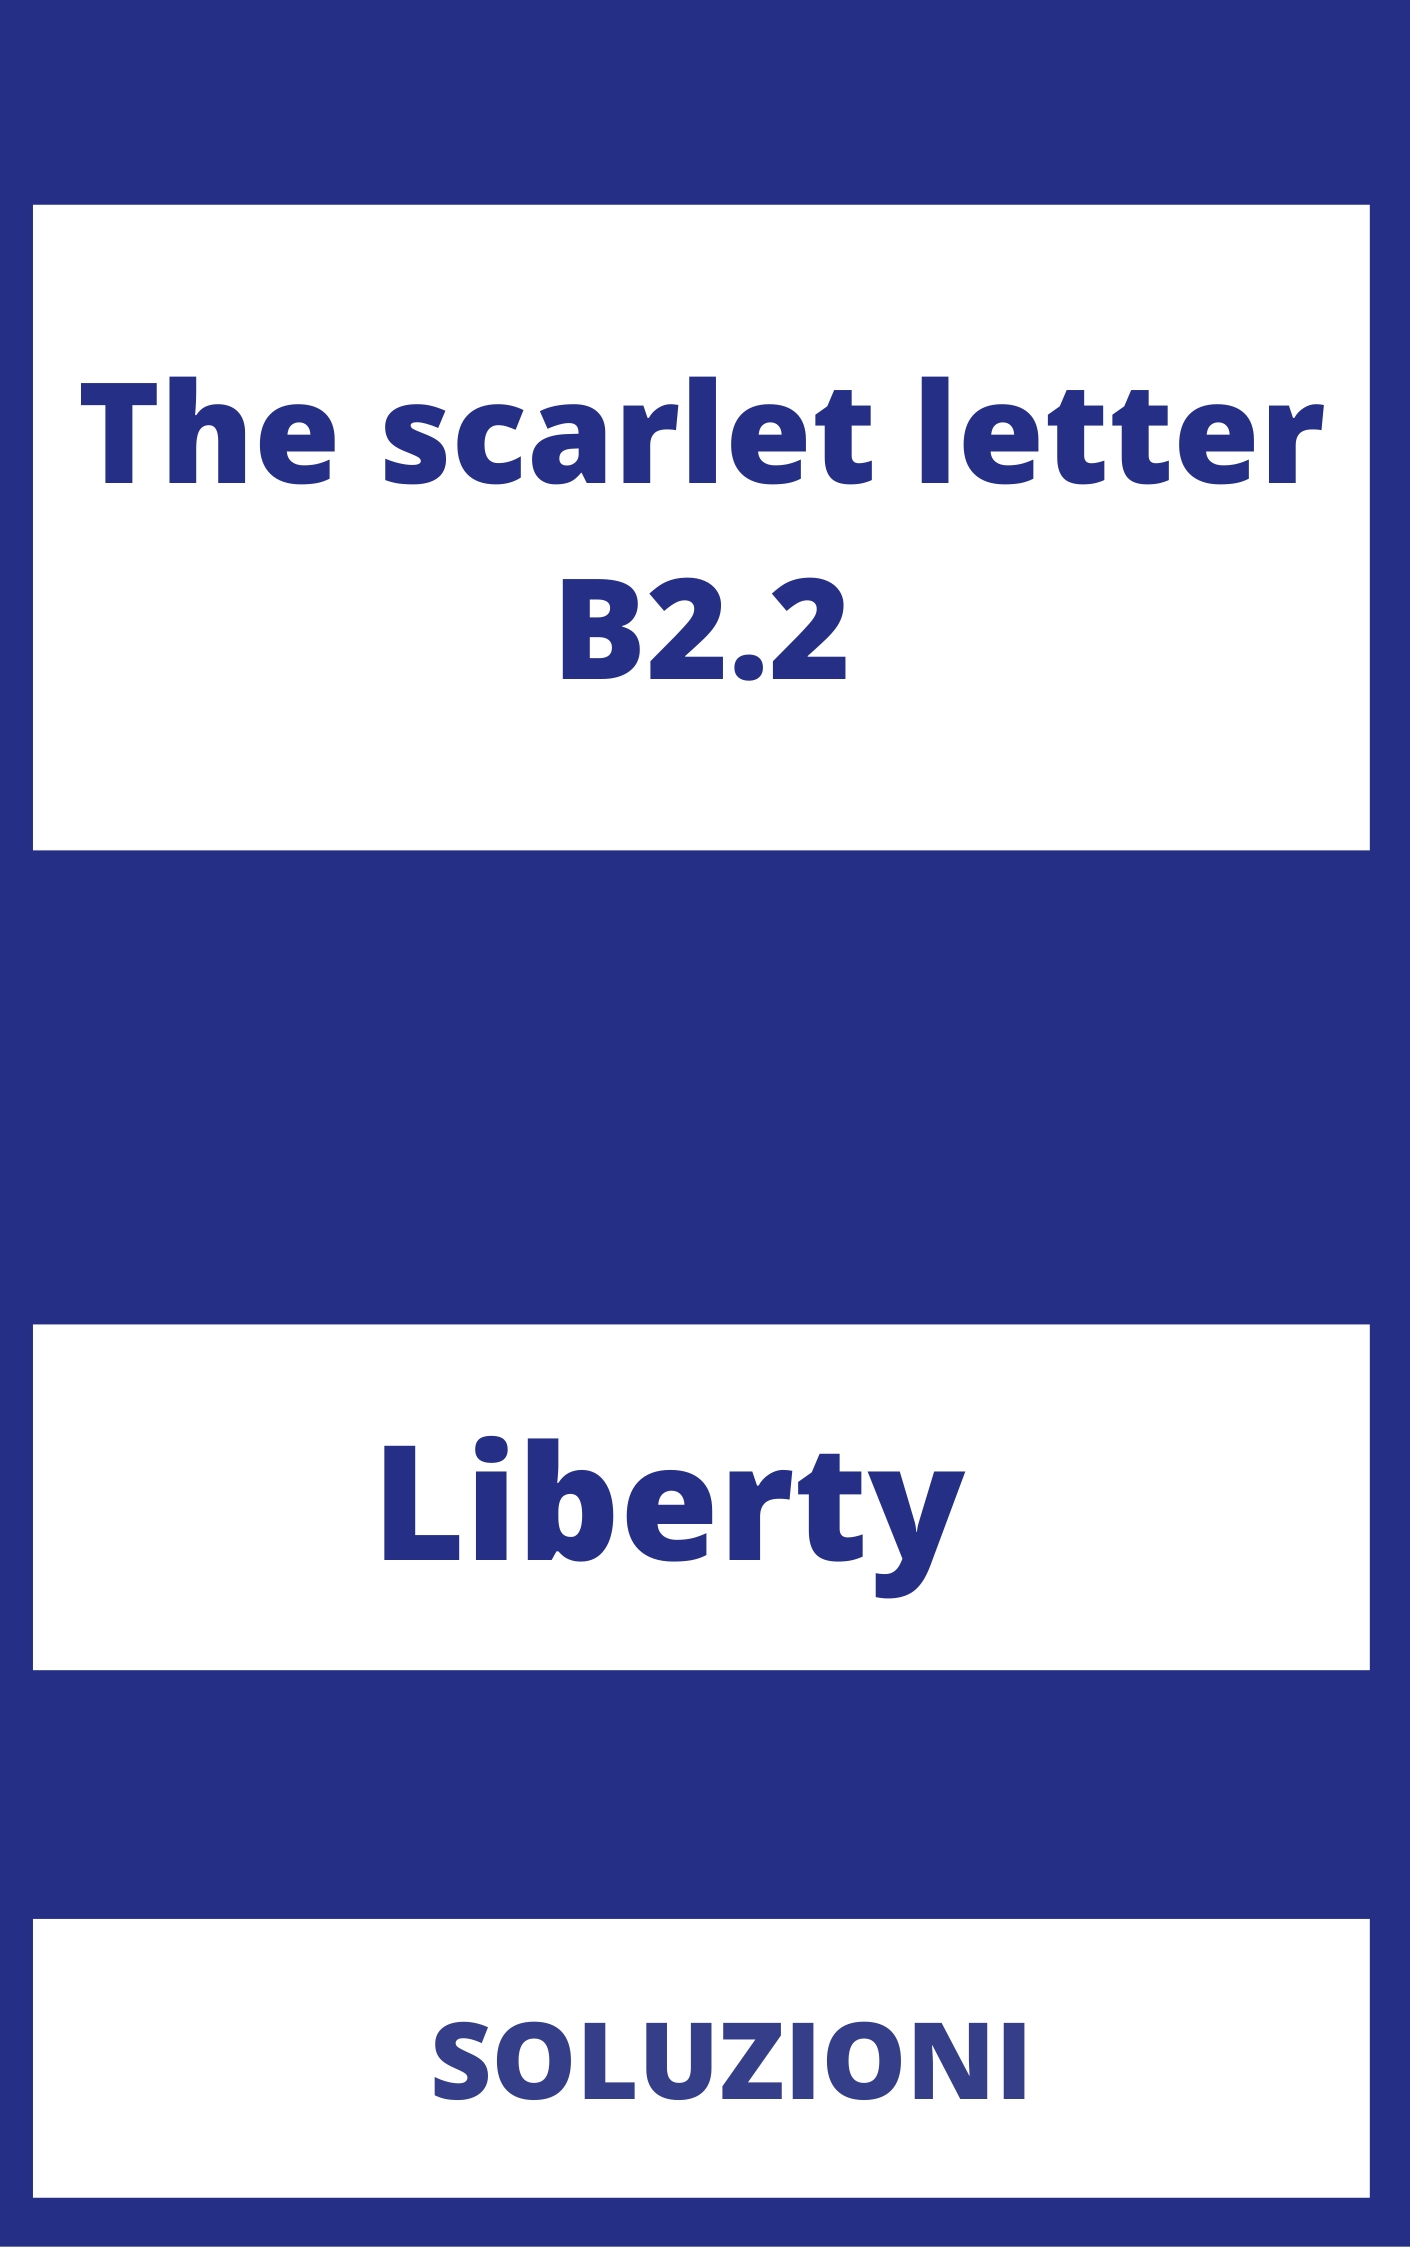 The scarlet letter B2.2 Soluzioni